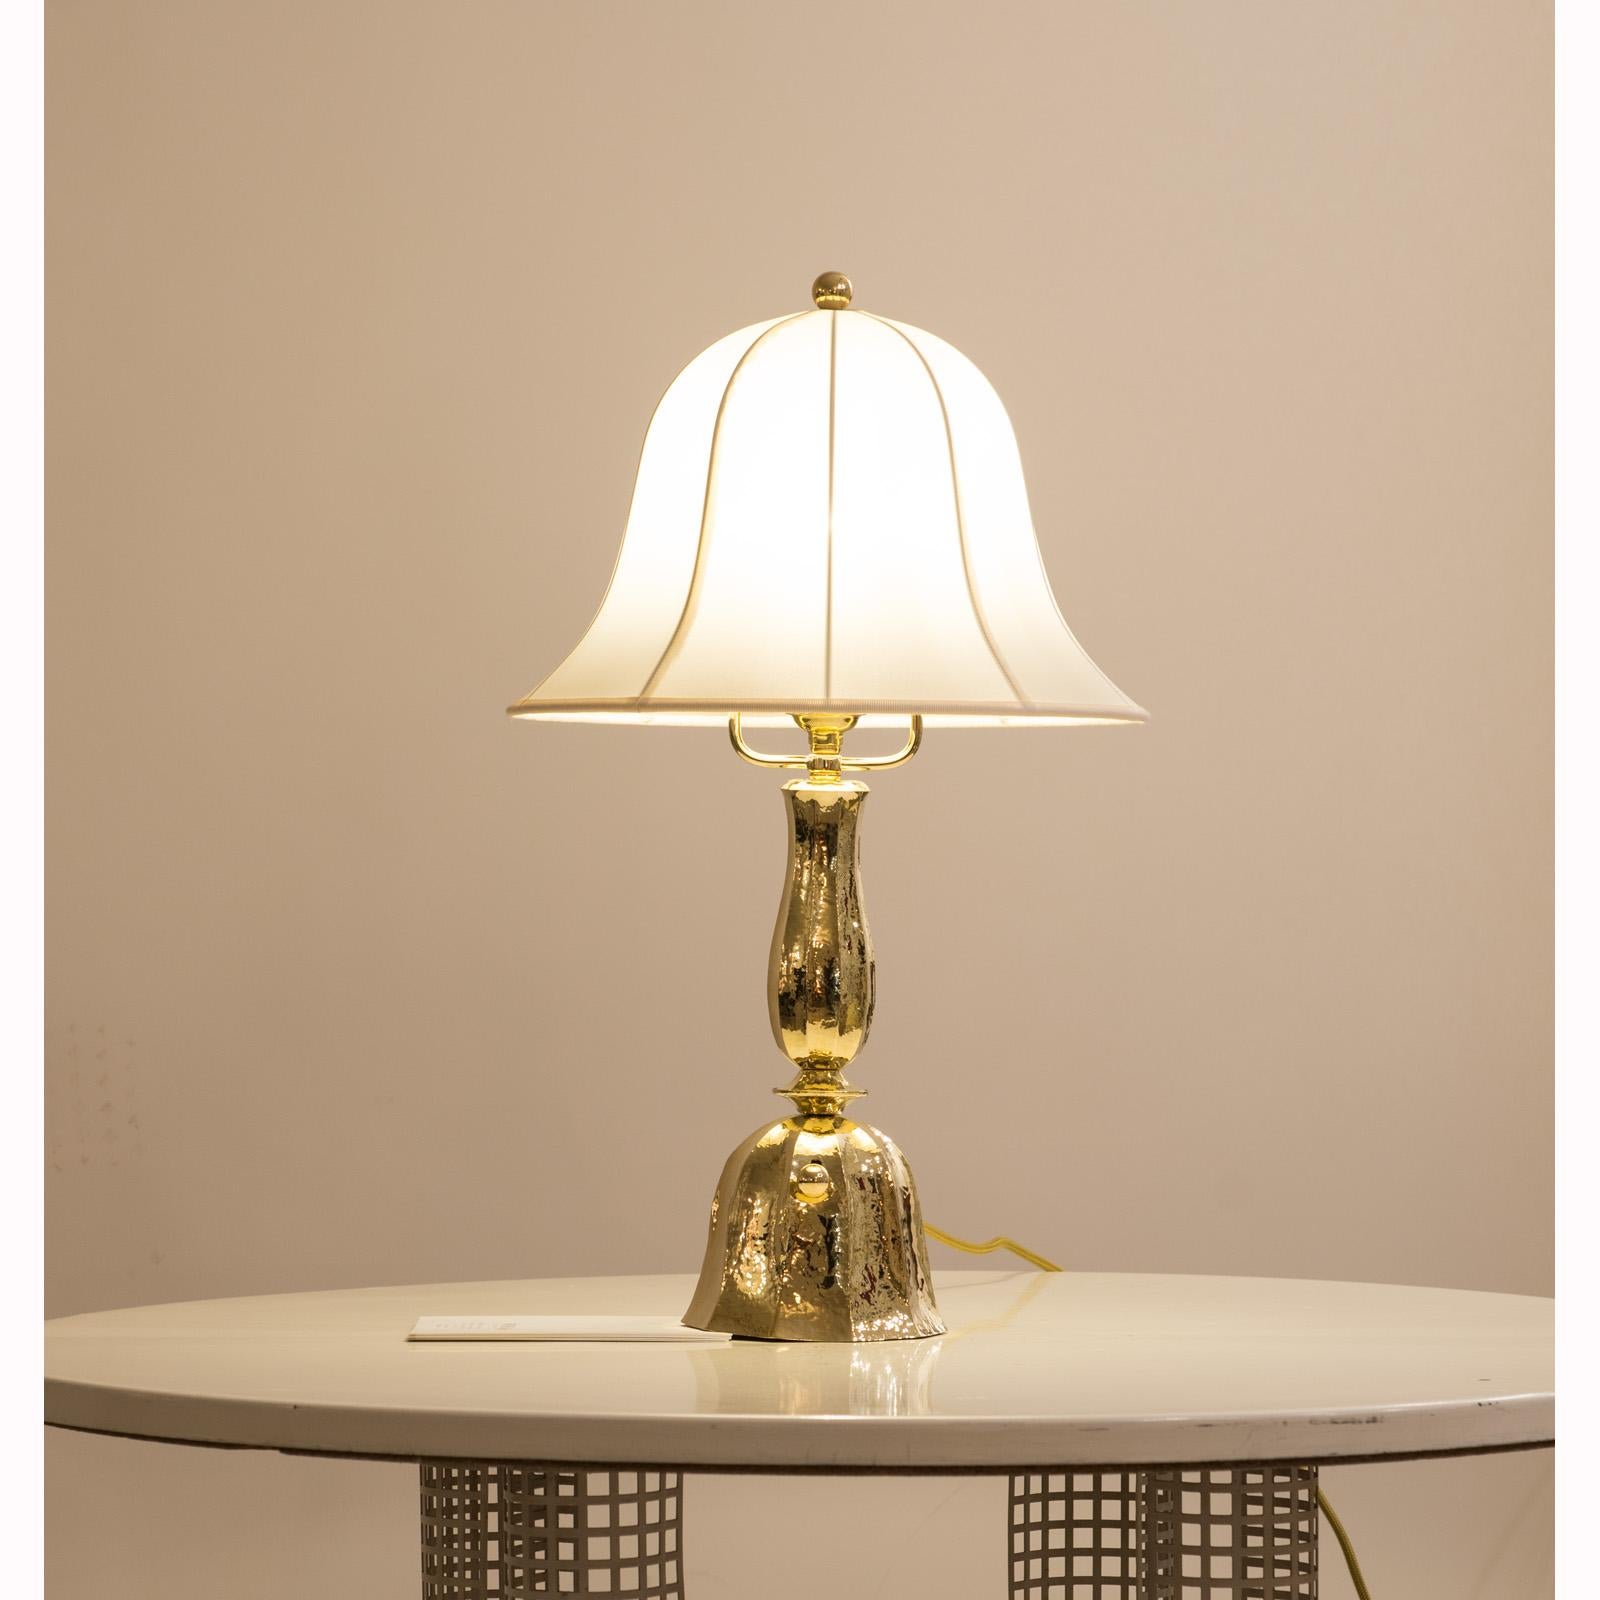 Lampe de bureau Josef Frank Fabric/Josef Hoffmann Wiener Werkstaette, réédition en vente 2